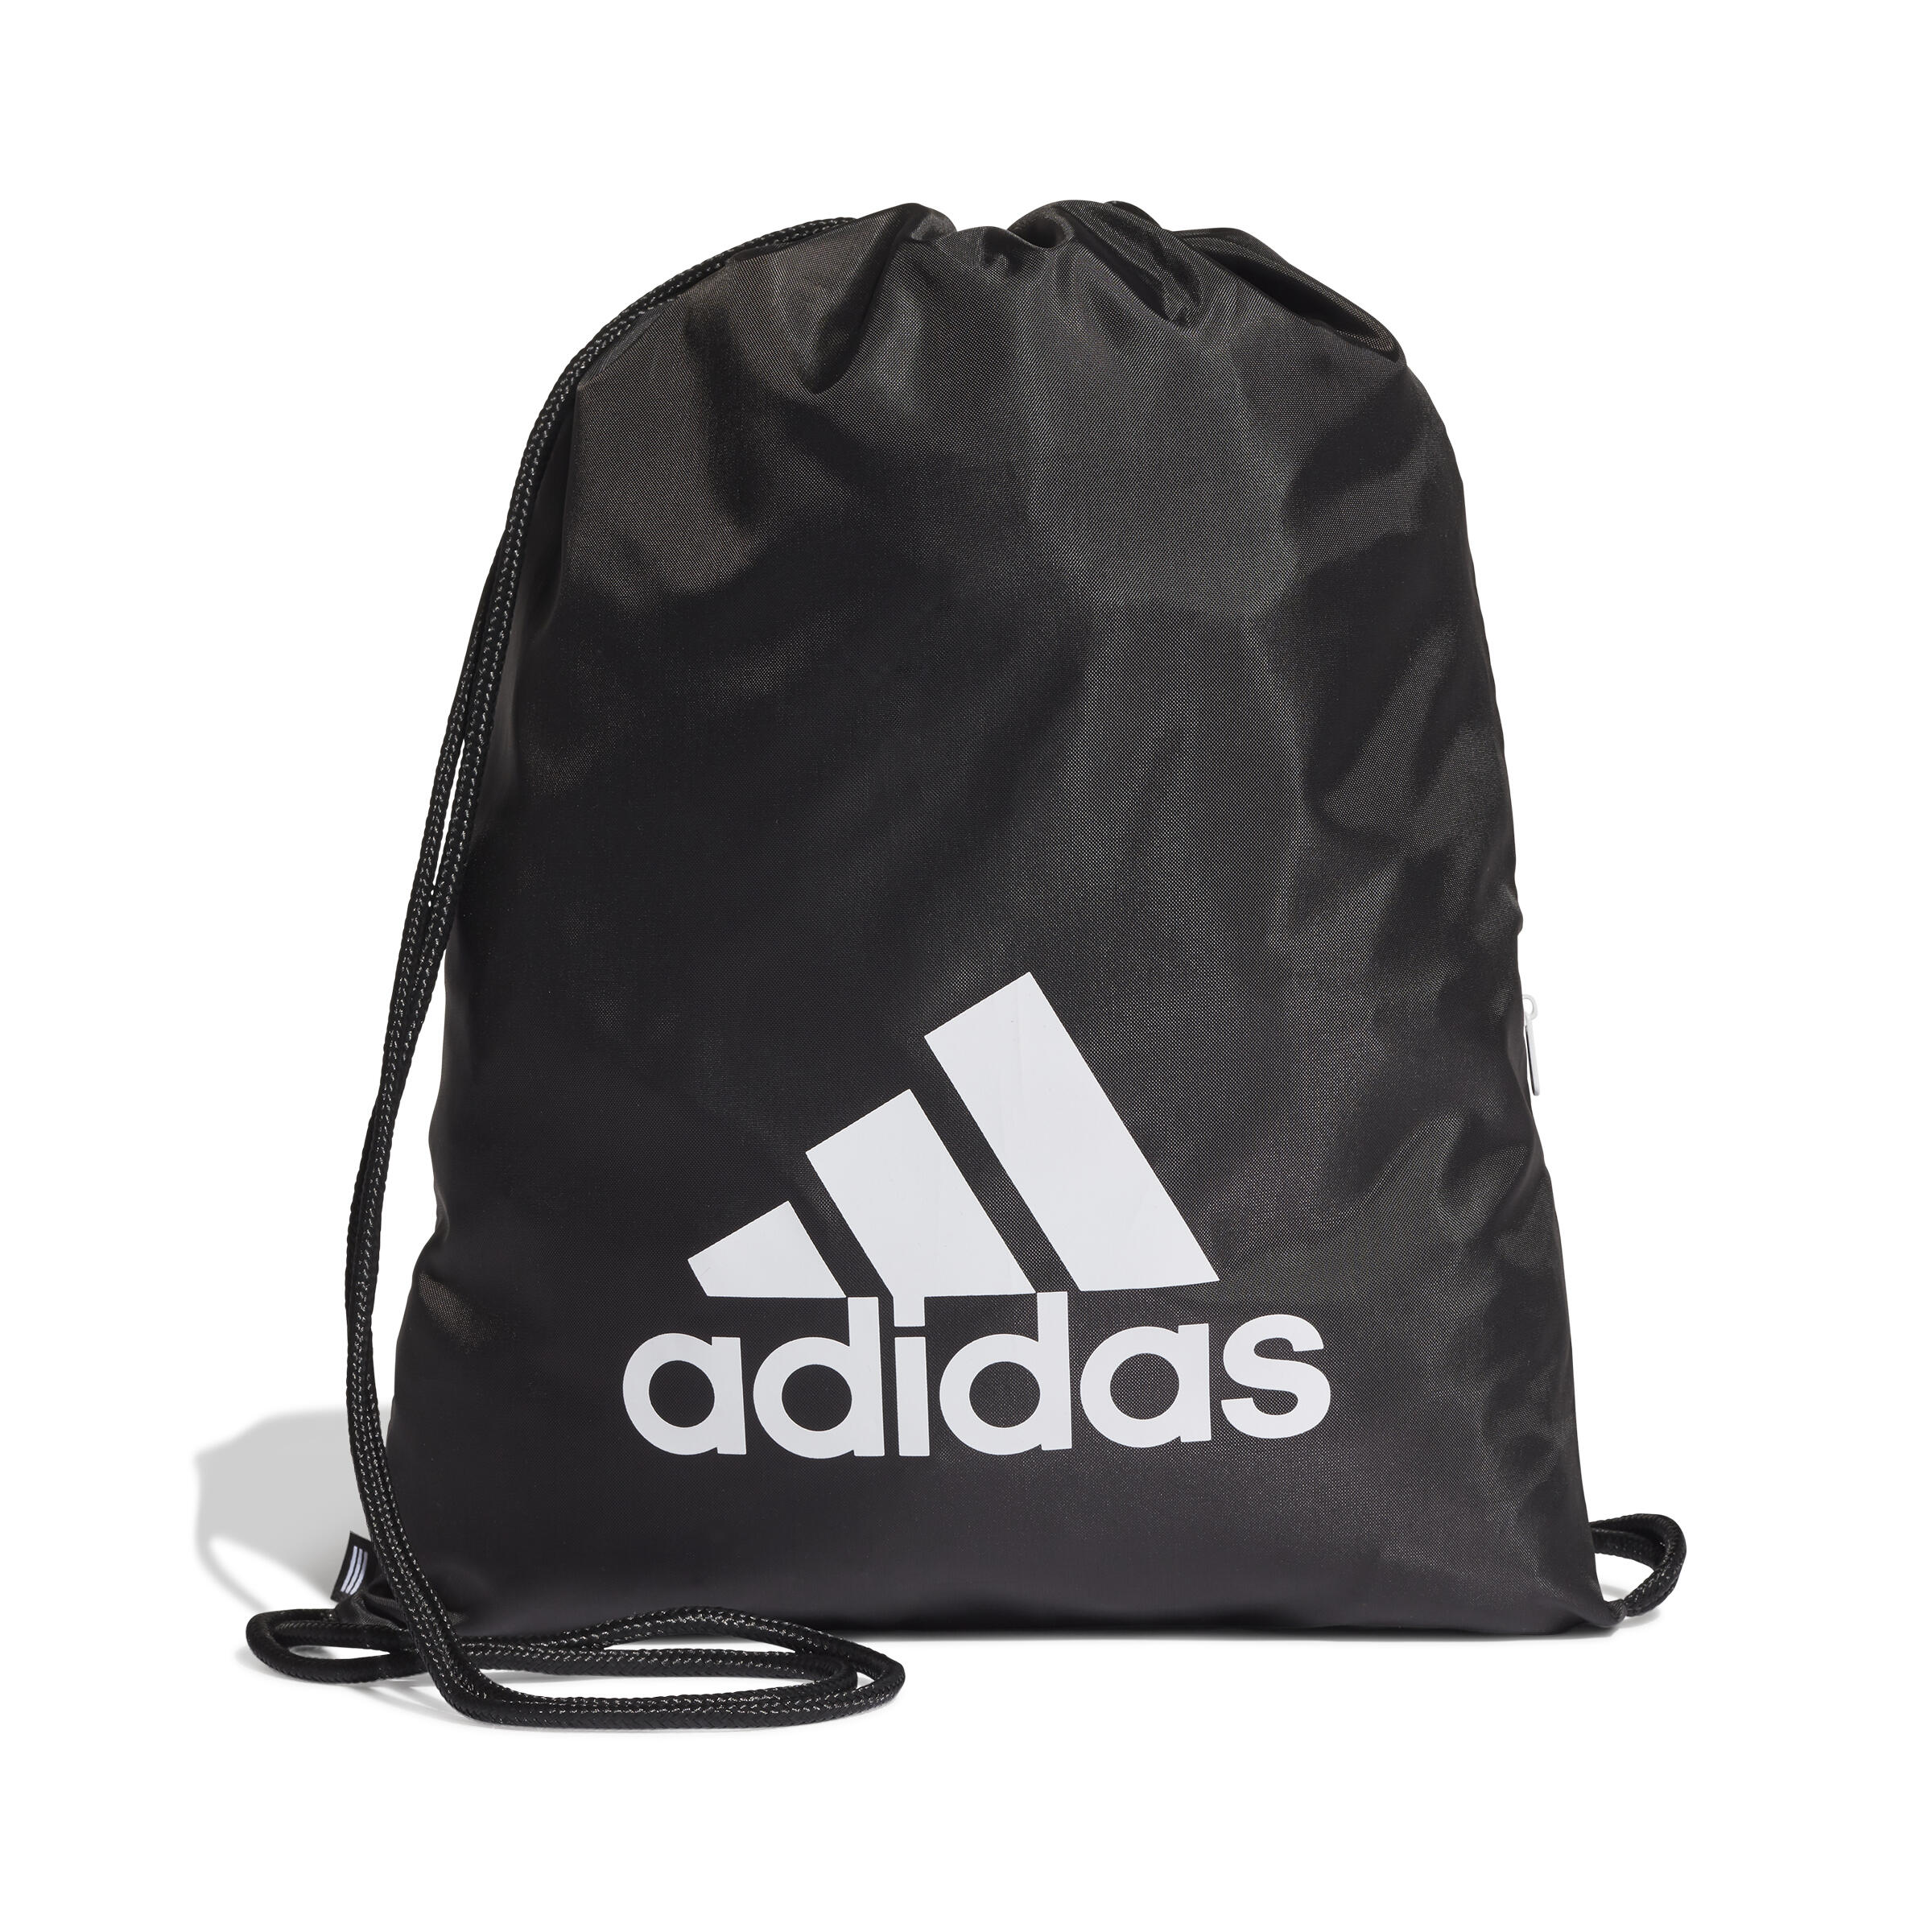 ADIDAS Sports Bag - Black